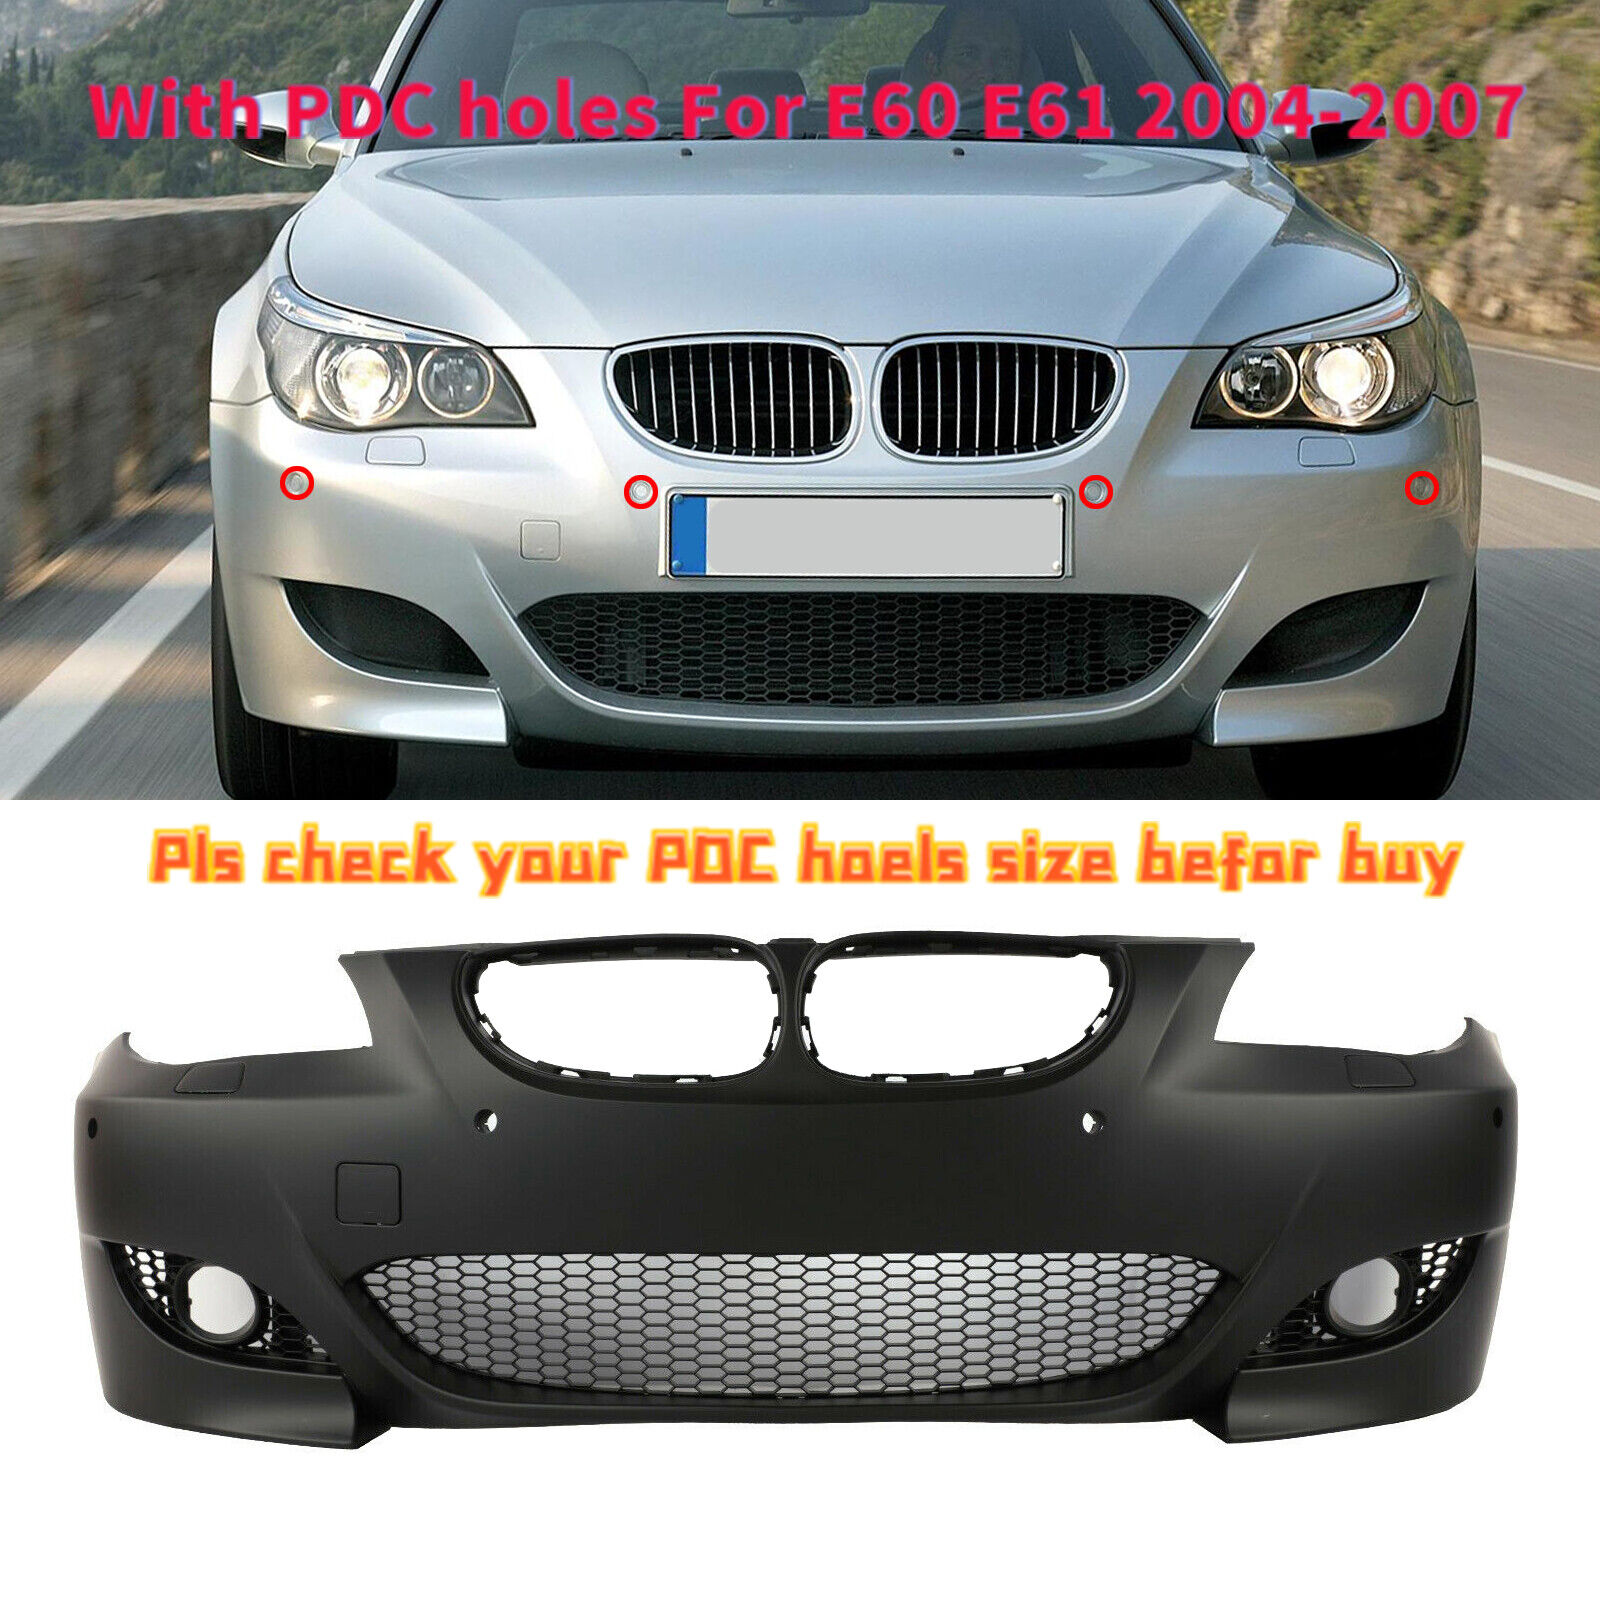 M5 Style Bumper Cover Kit For BMW E60 E61 525i 530i 550i With PDC Holes  2004-07